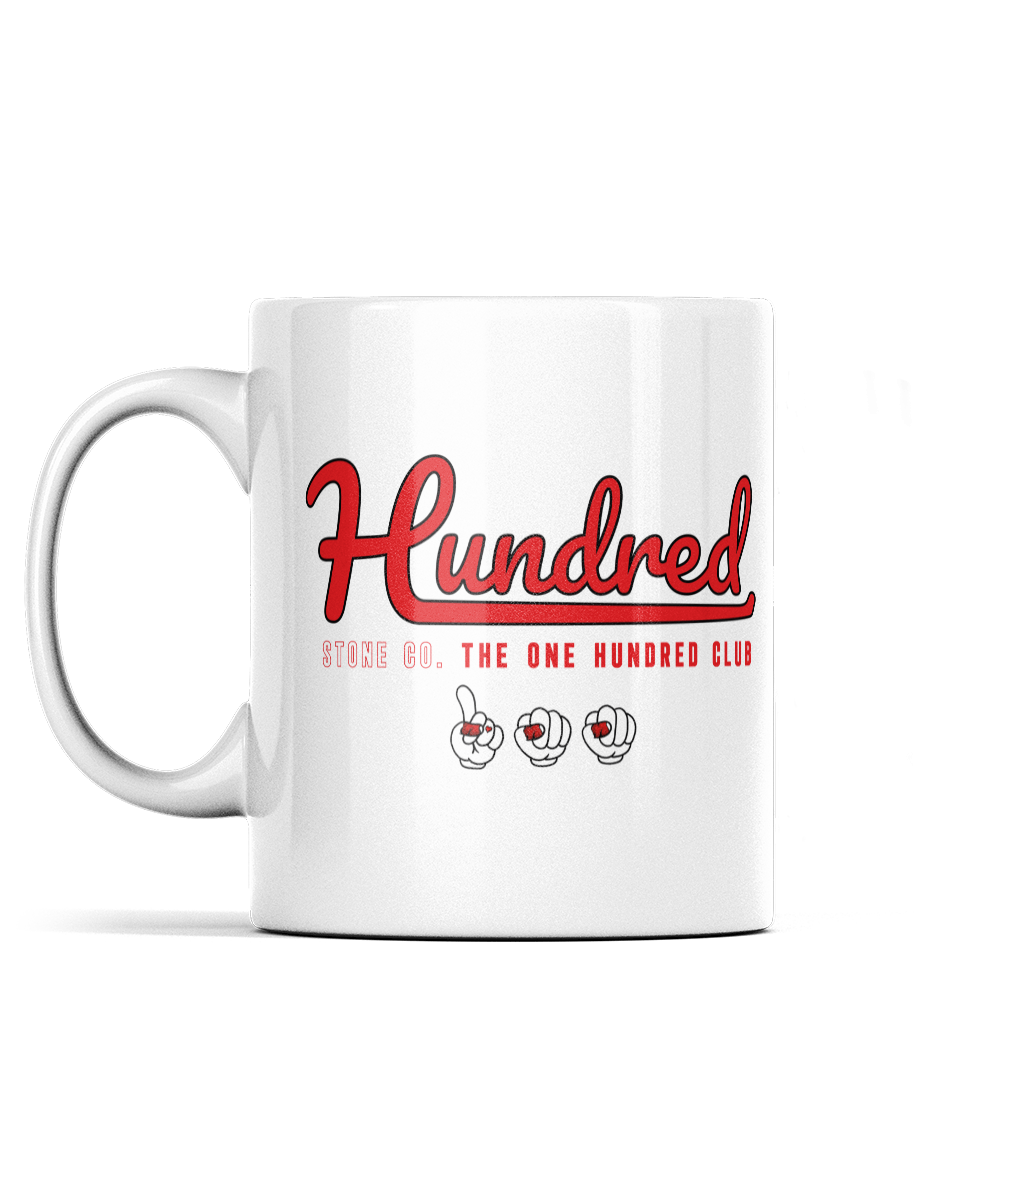 Hundred club mug